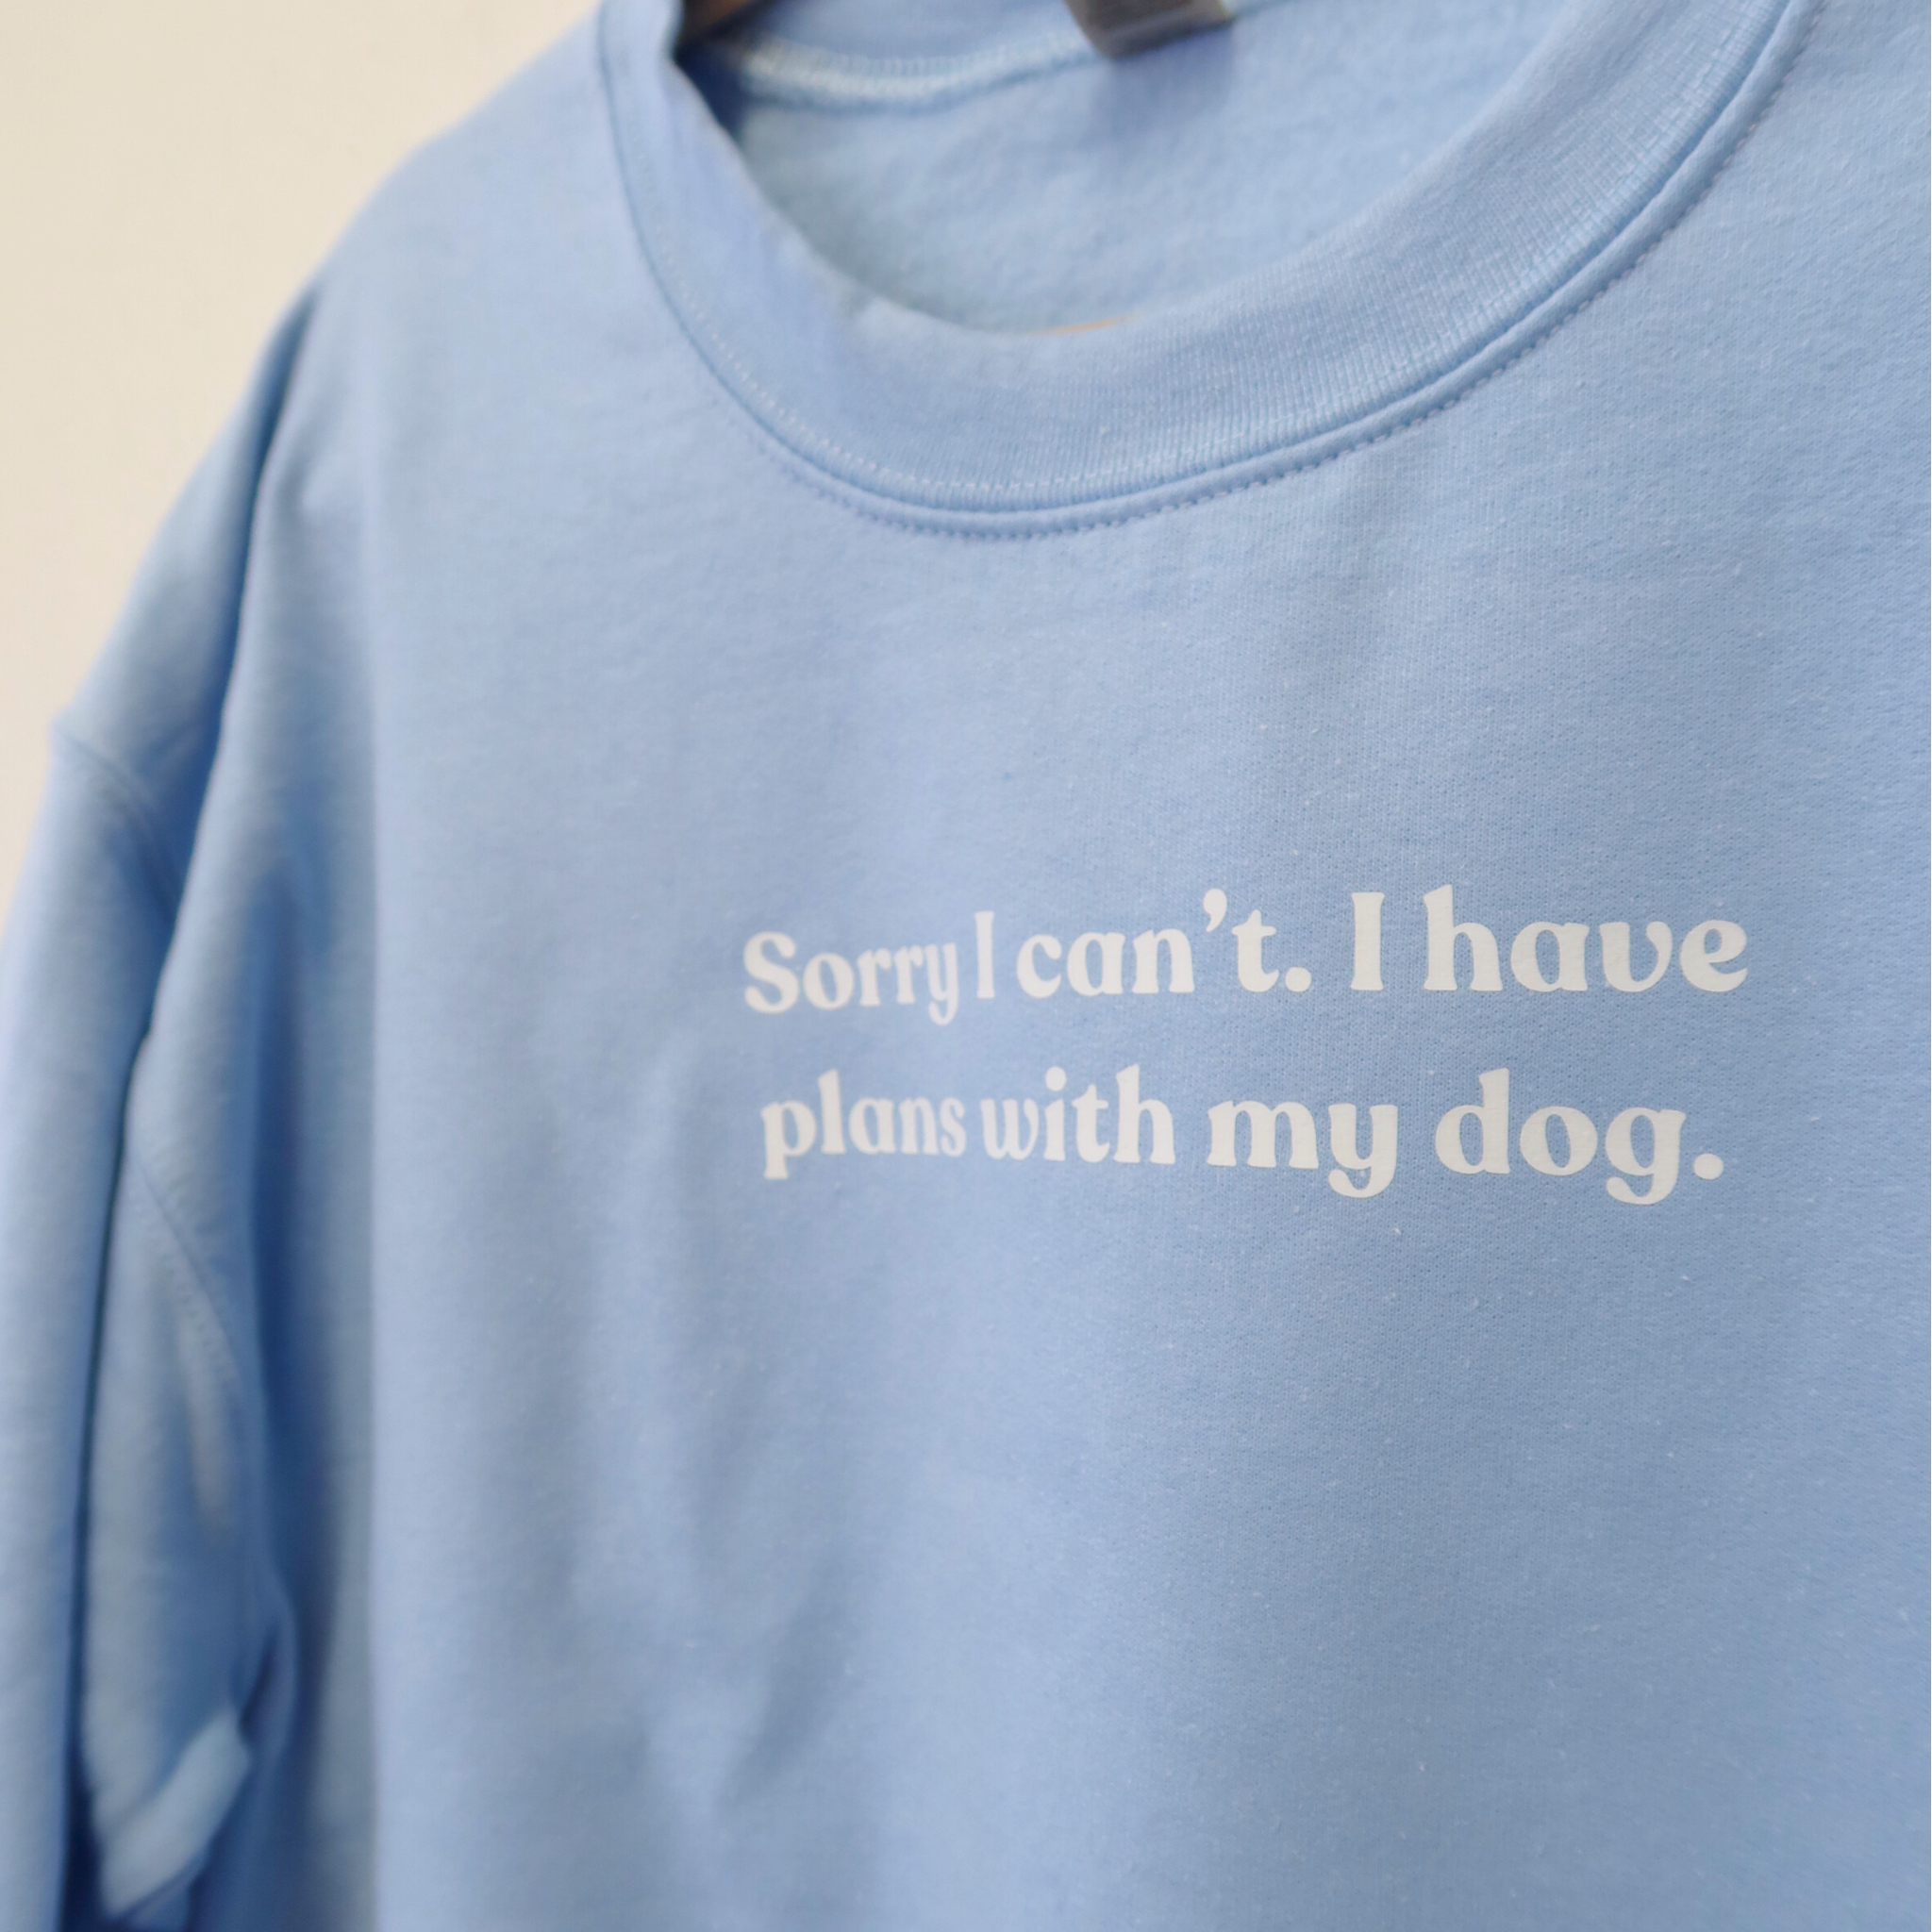 'Plans with my dog' sweatshirt